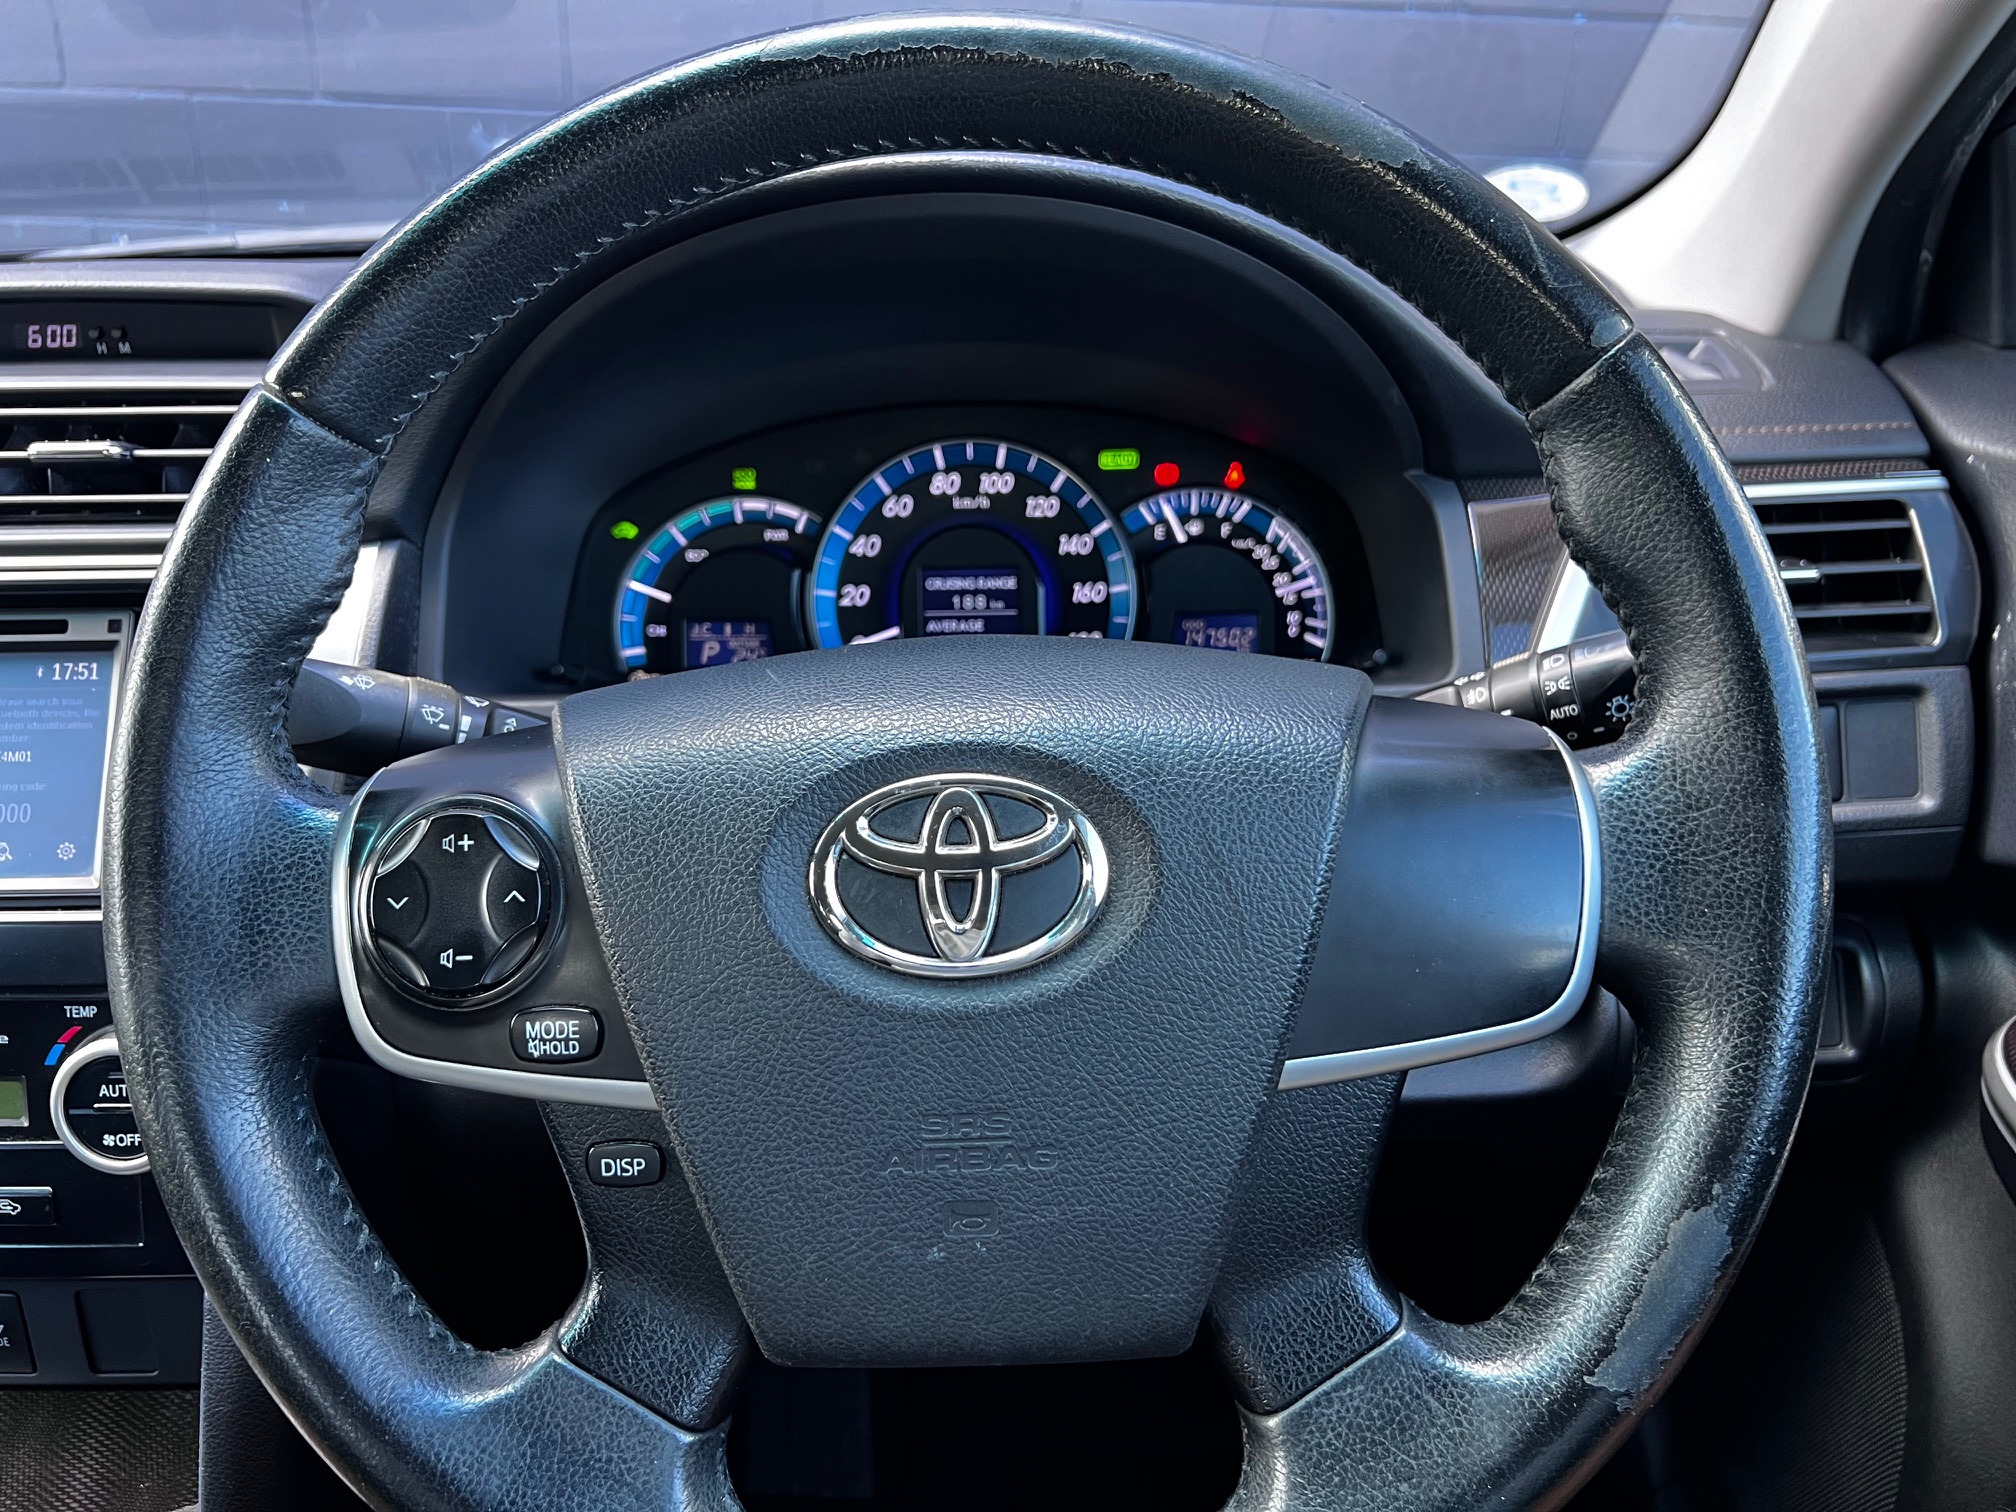 Toyota Camry 2012 Image 19